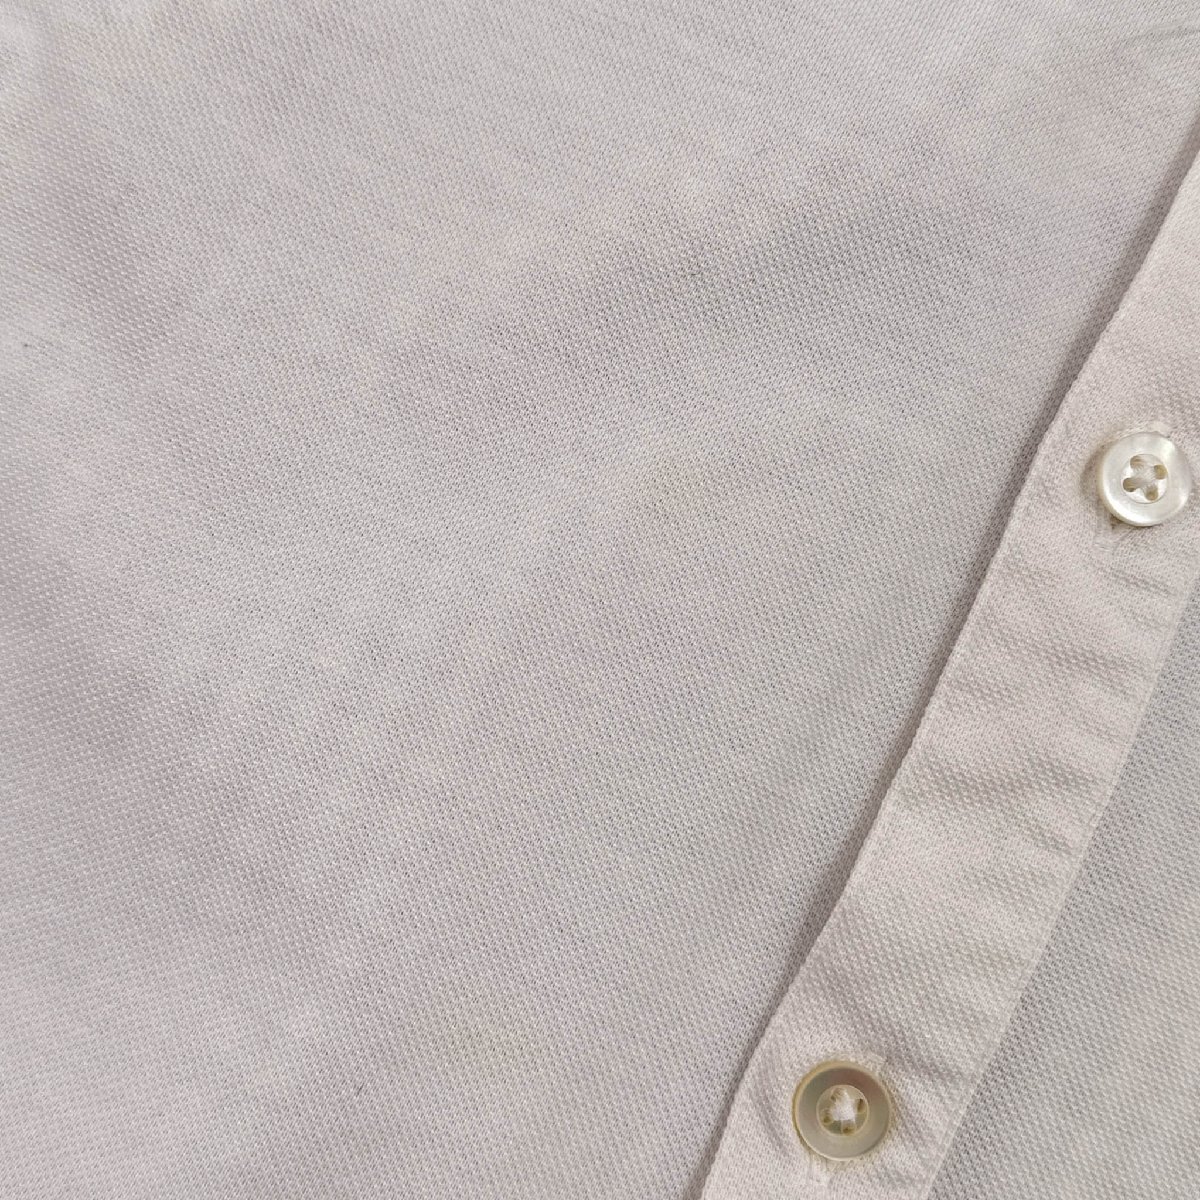 FRED PERRY フレッドペリー ギンガムチェック 切り替え 半袖シャツ サイズ L /ヒットユニオン/ホワイト×グレー/メンズの画像4